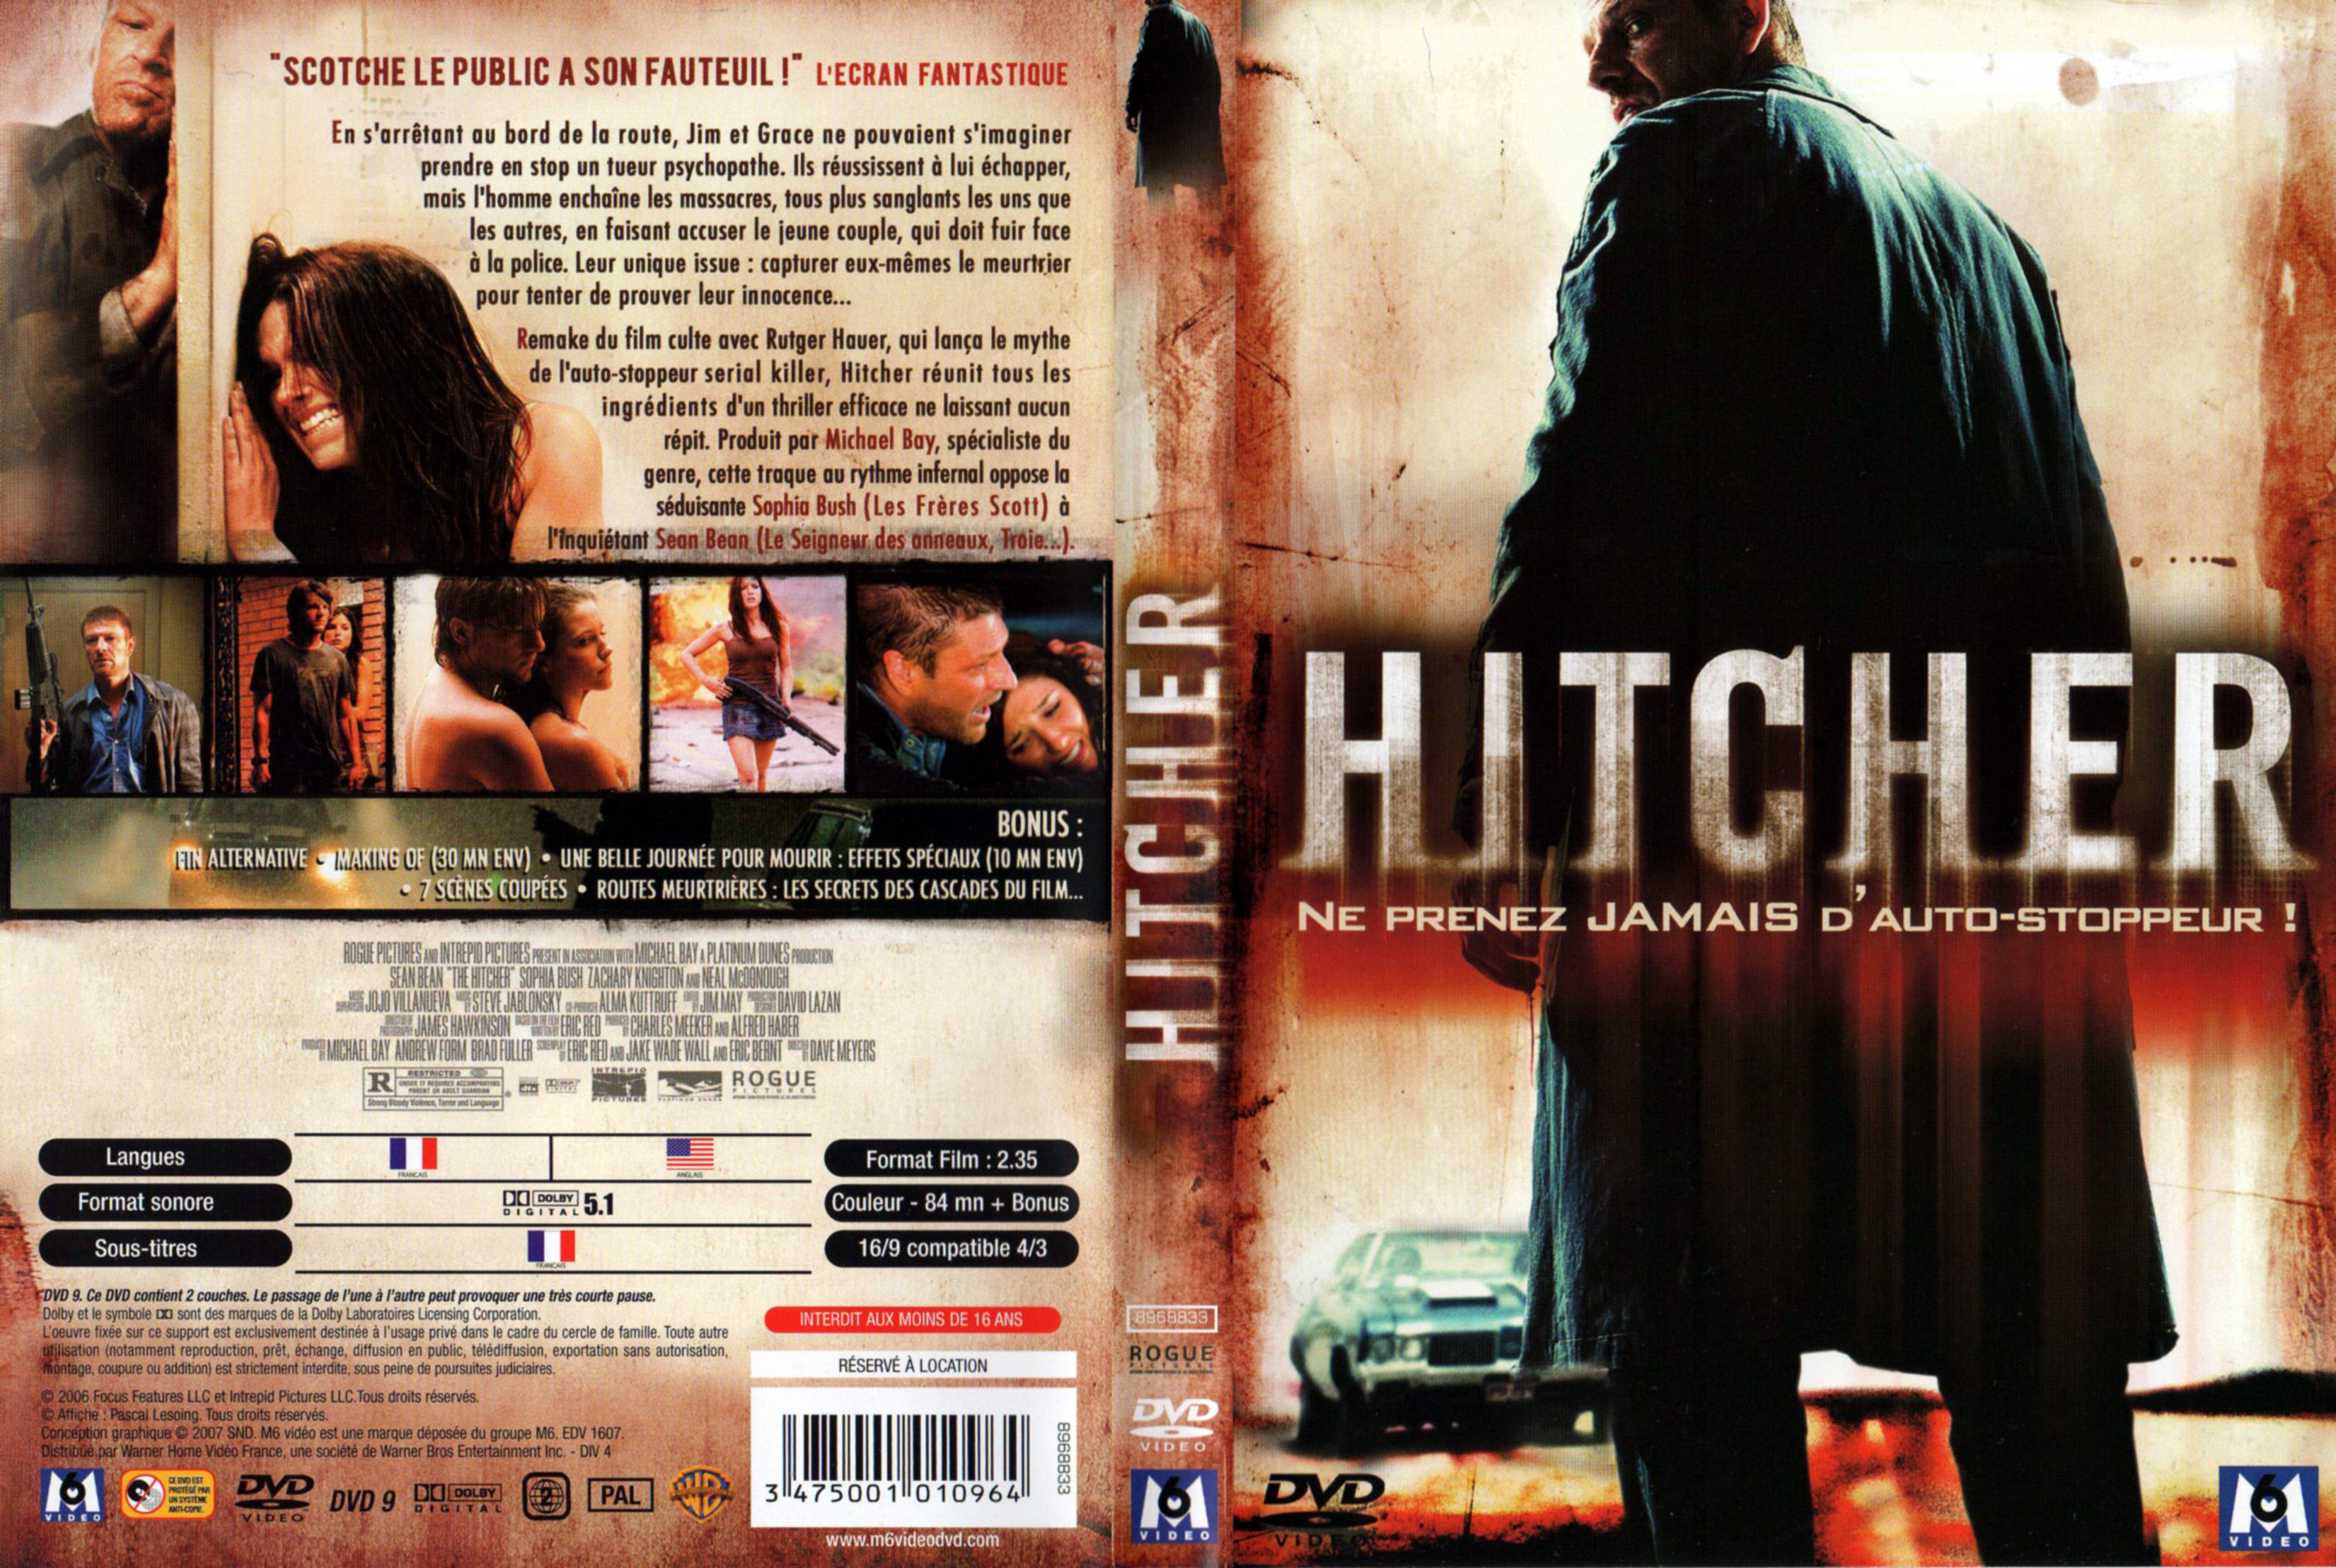 Jaquette DVD Hitcher (2007)